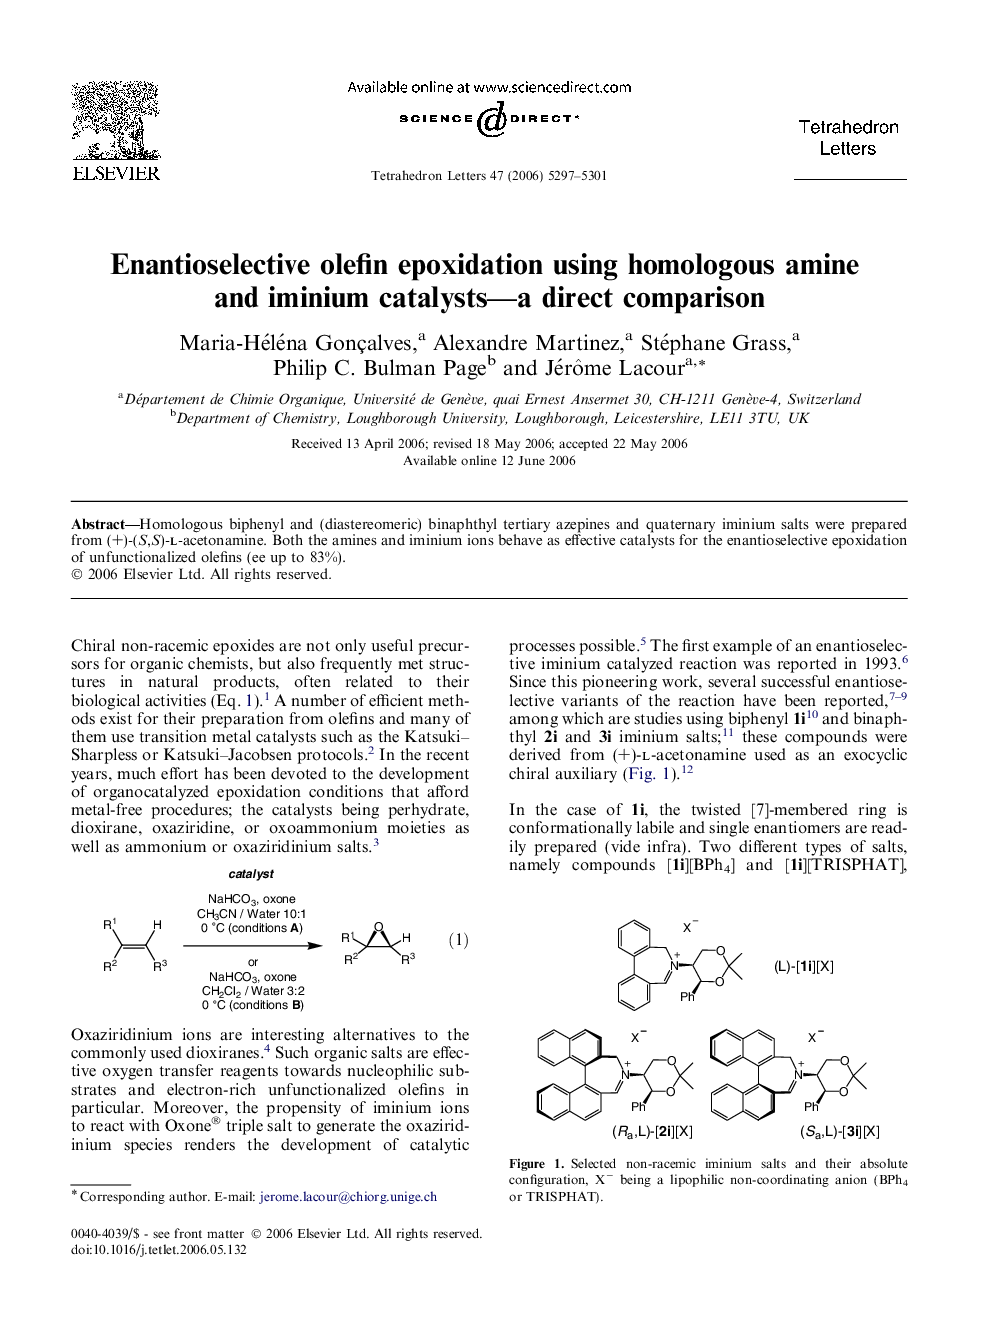 Enantioselective olefin epoxidation using homologous amine and iminium catalysts-a direct comparison